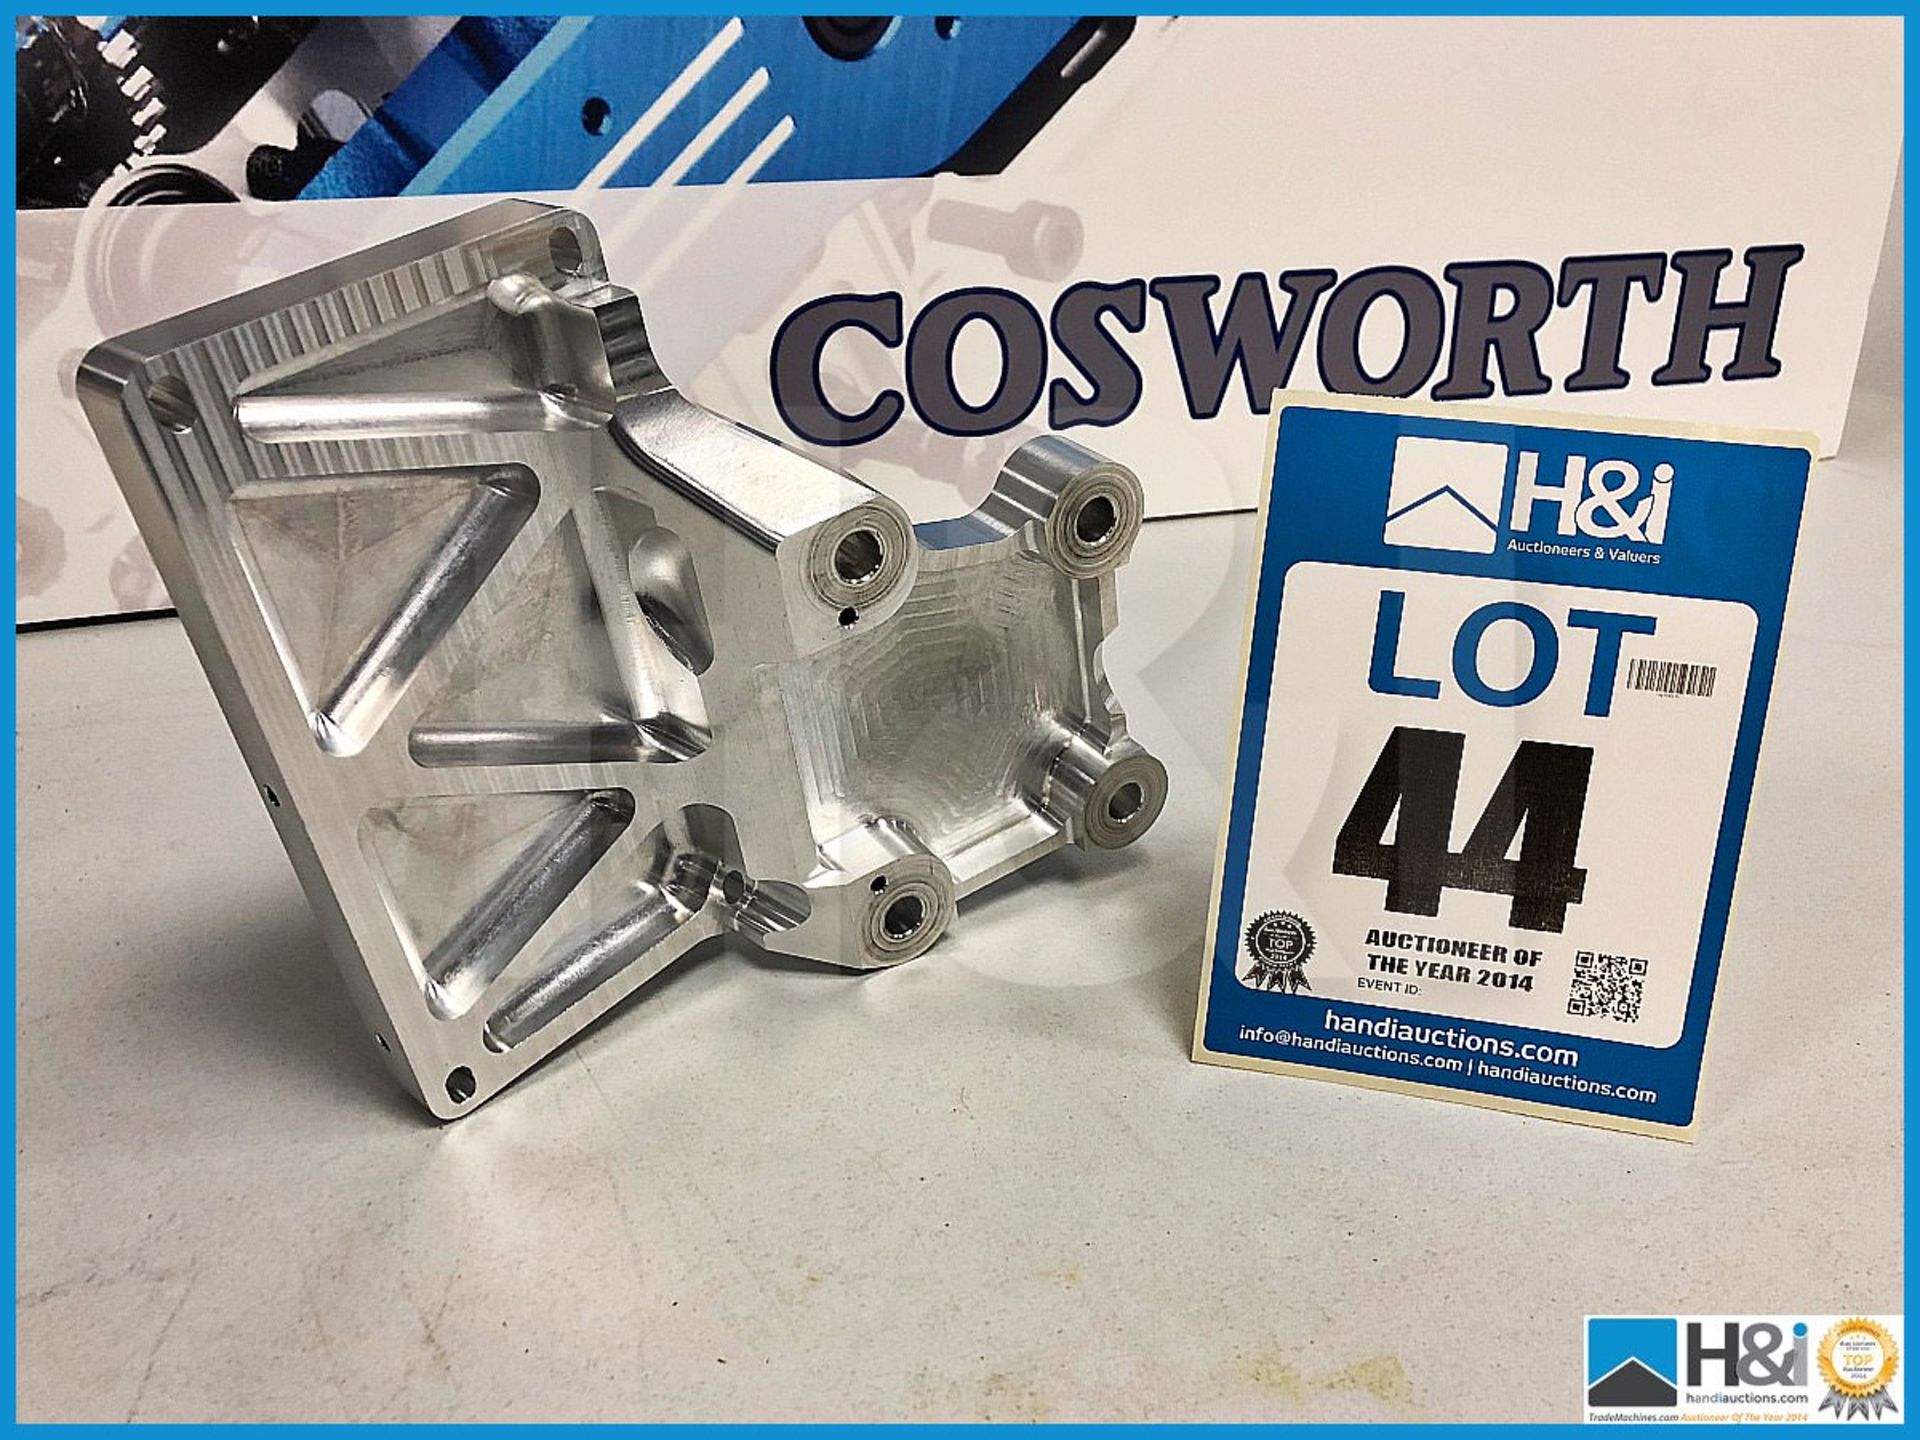 9 x Cosworth Lotus Evora GT2 GLC scavenge pump mounting bracket. Code: 20024004. Lot 222